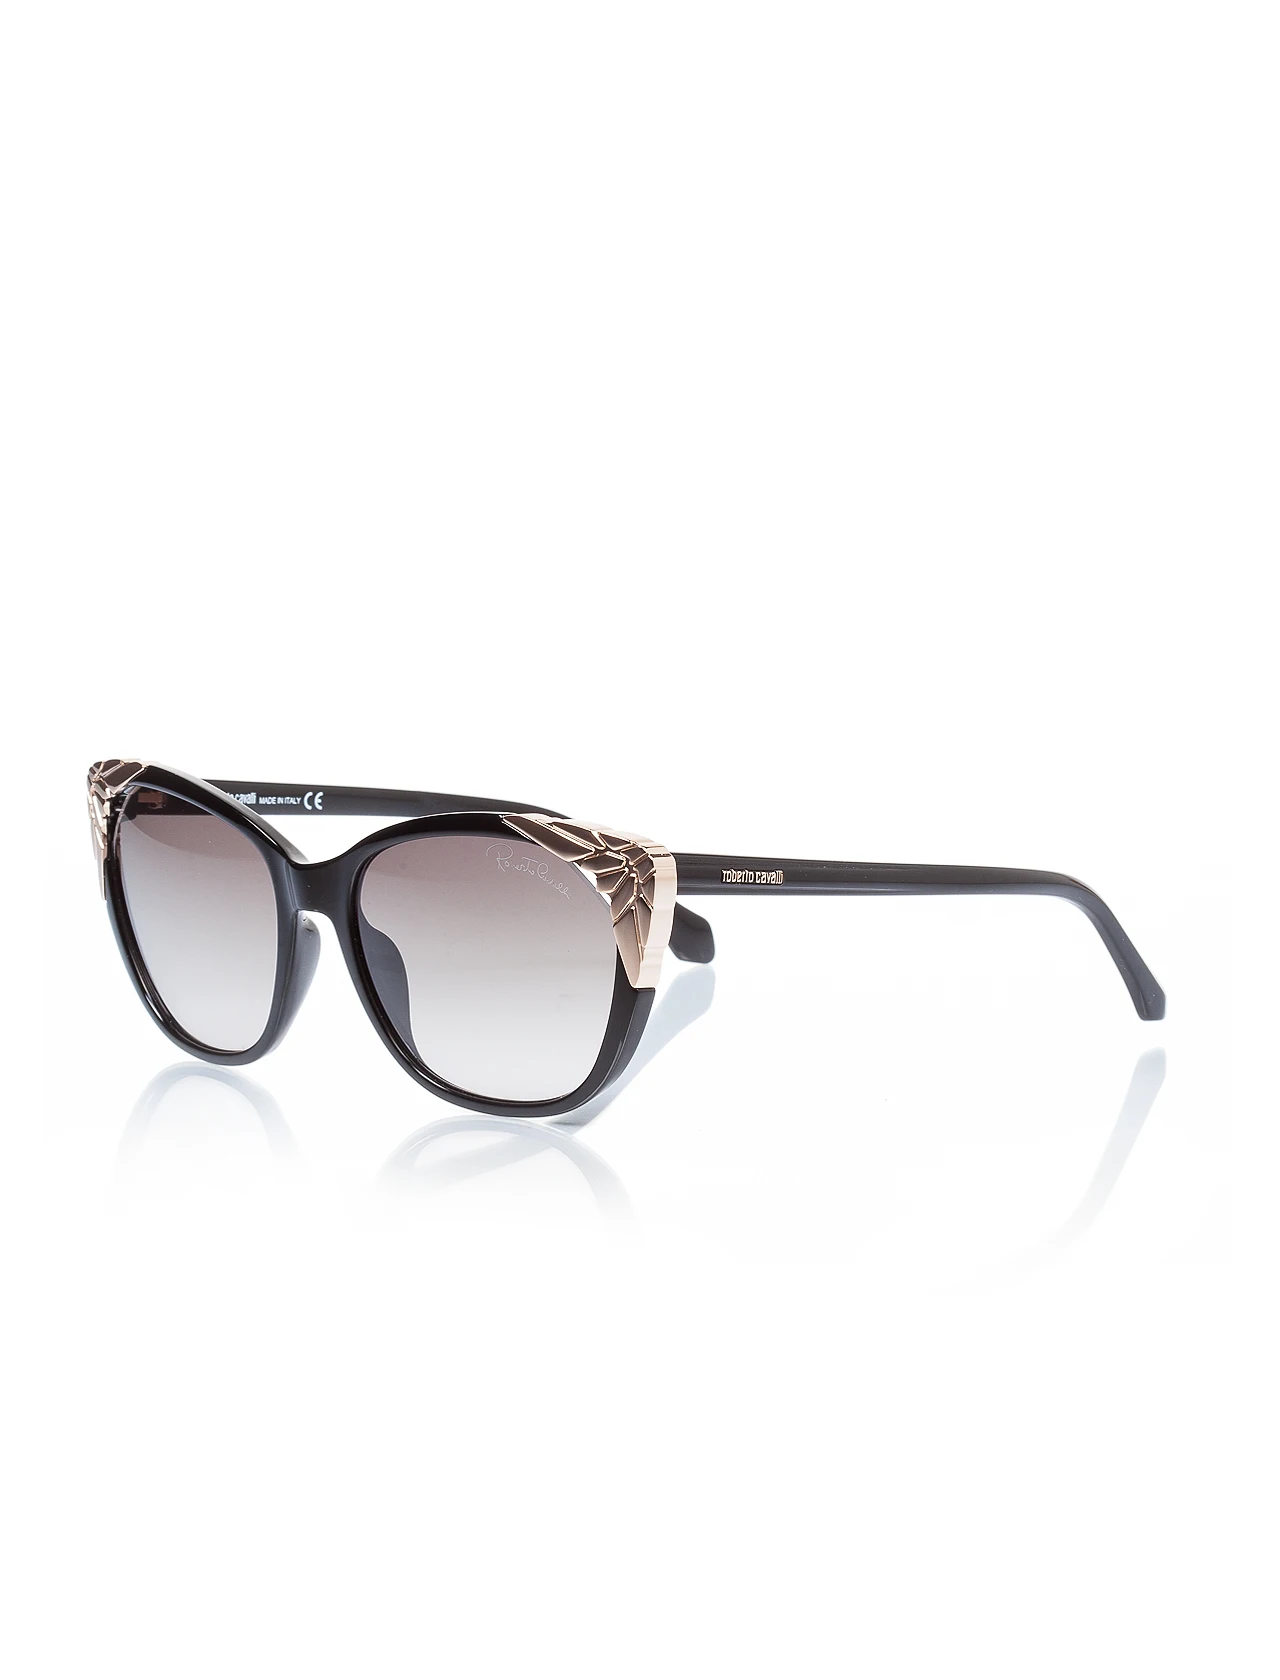 

Women's sunglasses rc 1034 01b bone black organic butterfly cat eye 56-17-140 roberto cavalli